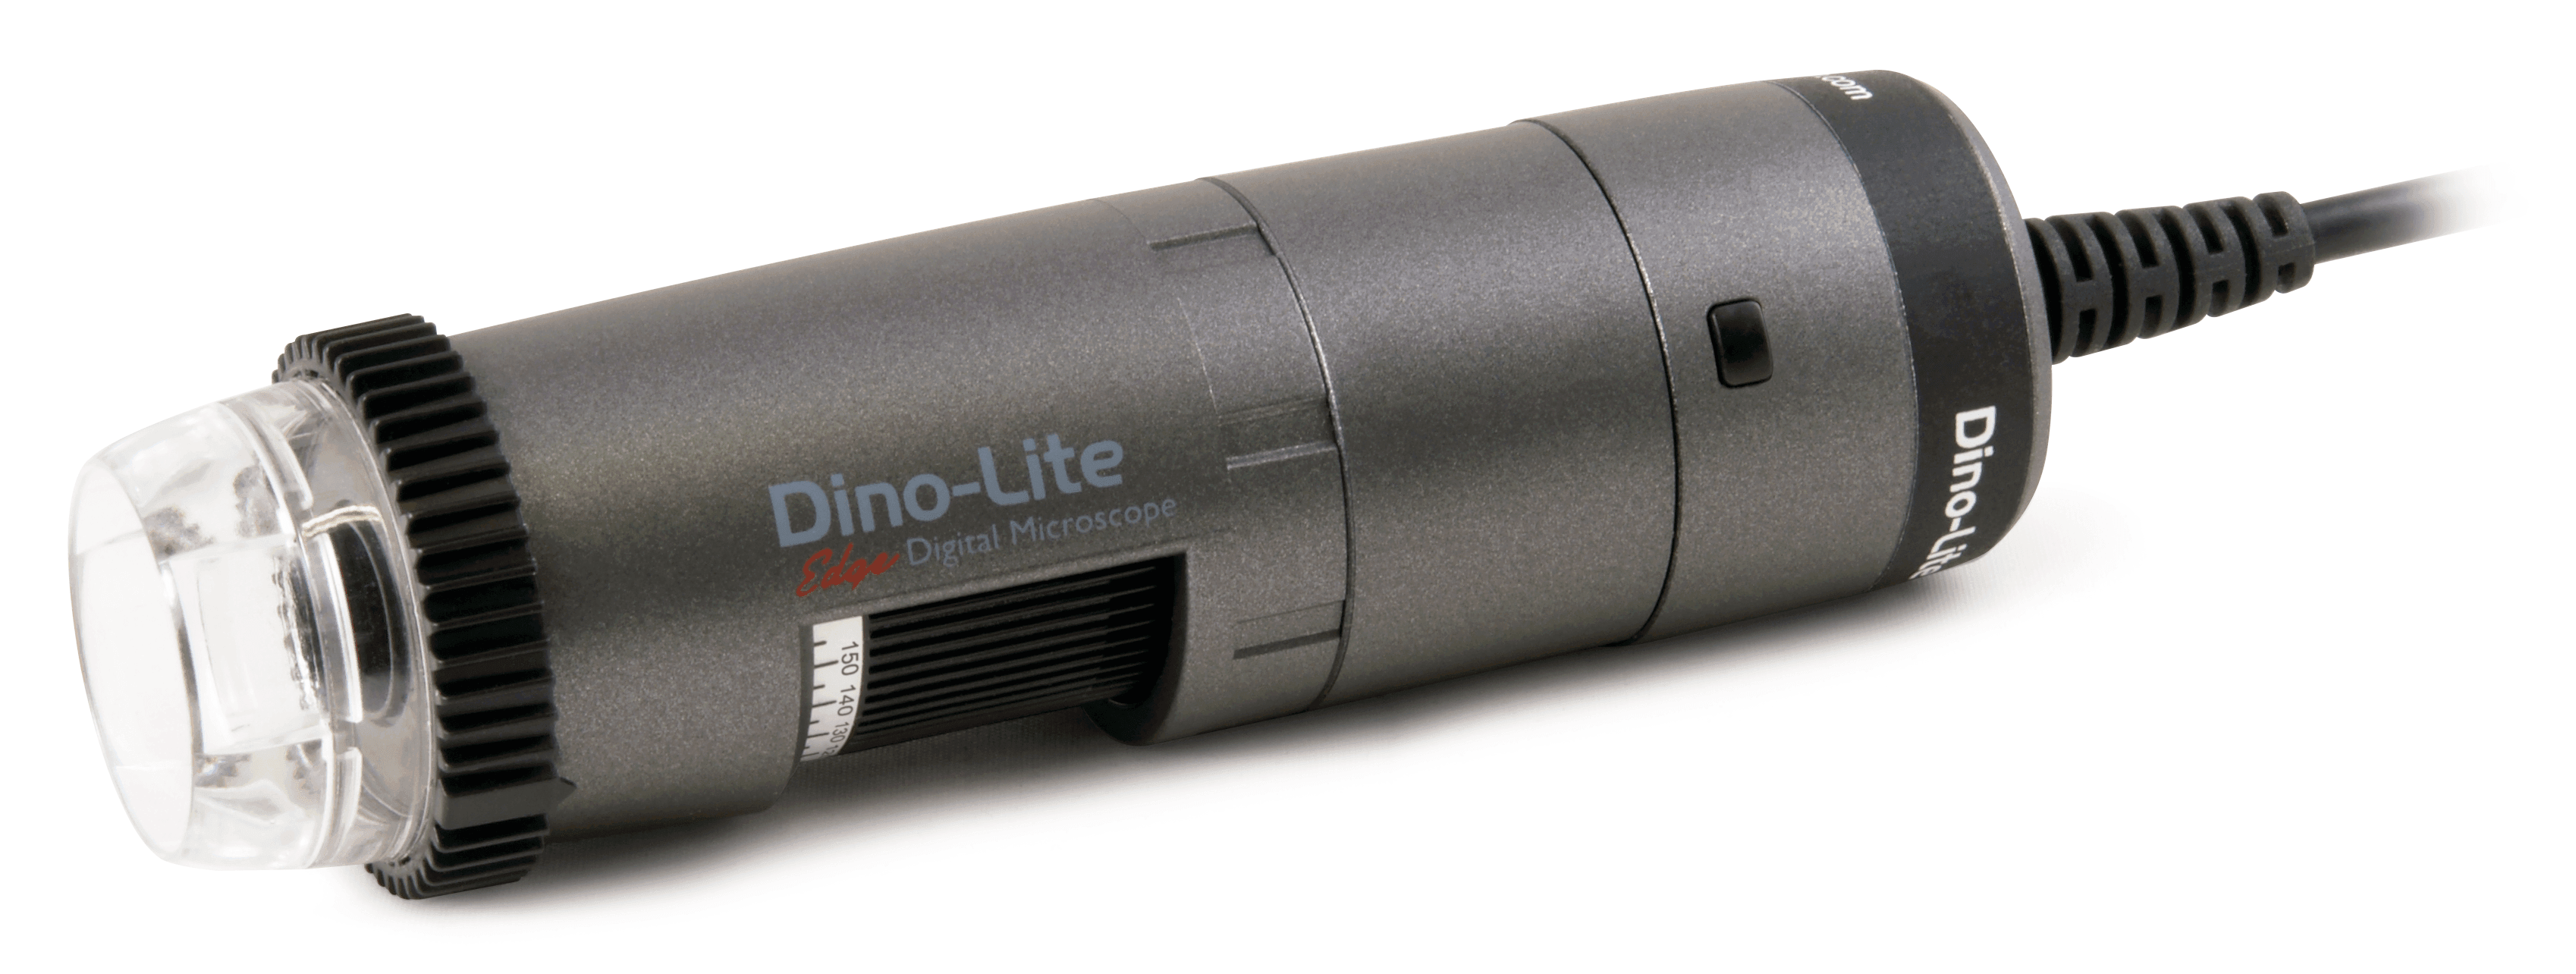 DINO-LITE AF4915ZT EDGE DIGITAL MICROSCOPE USB - UNIVERSAL1.3MP, 20~220X,  POLARIZER, FLC/AMR/EDOF/EDR